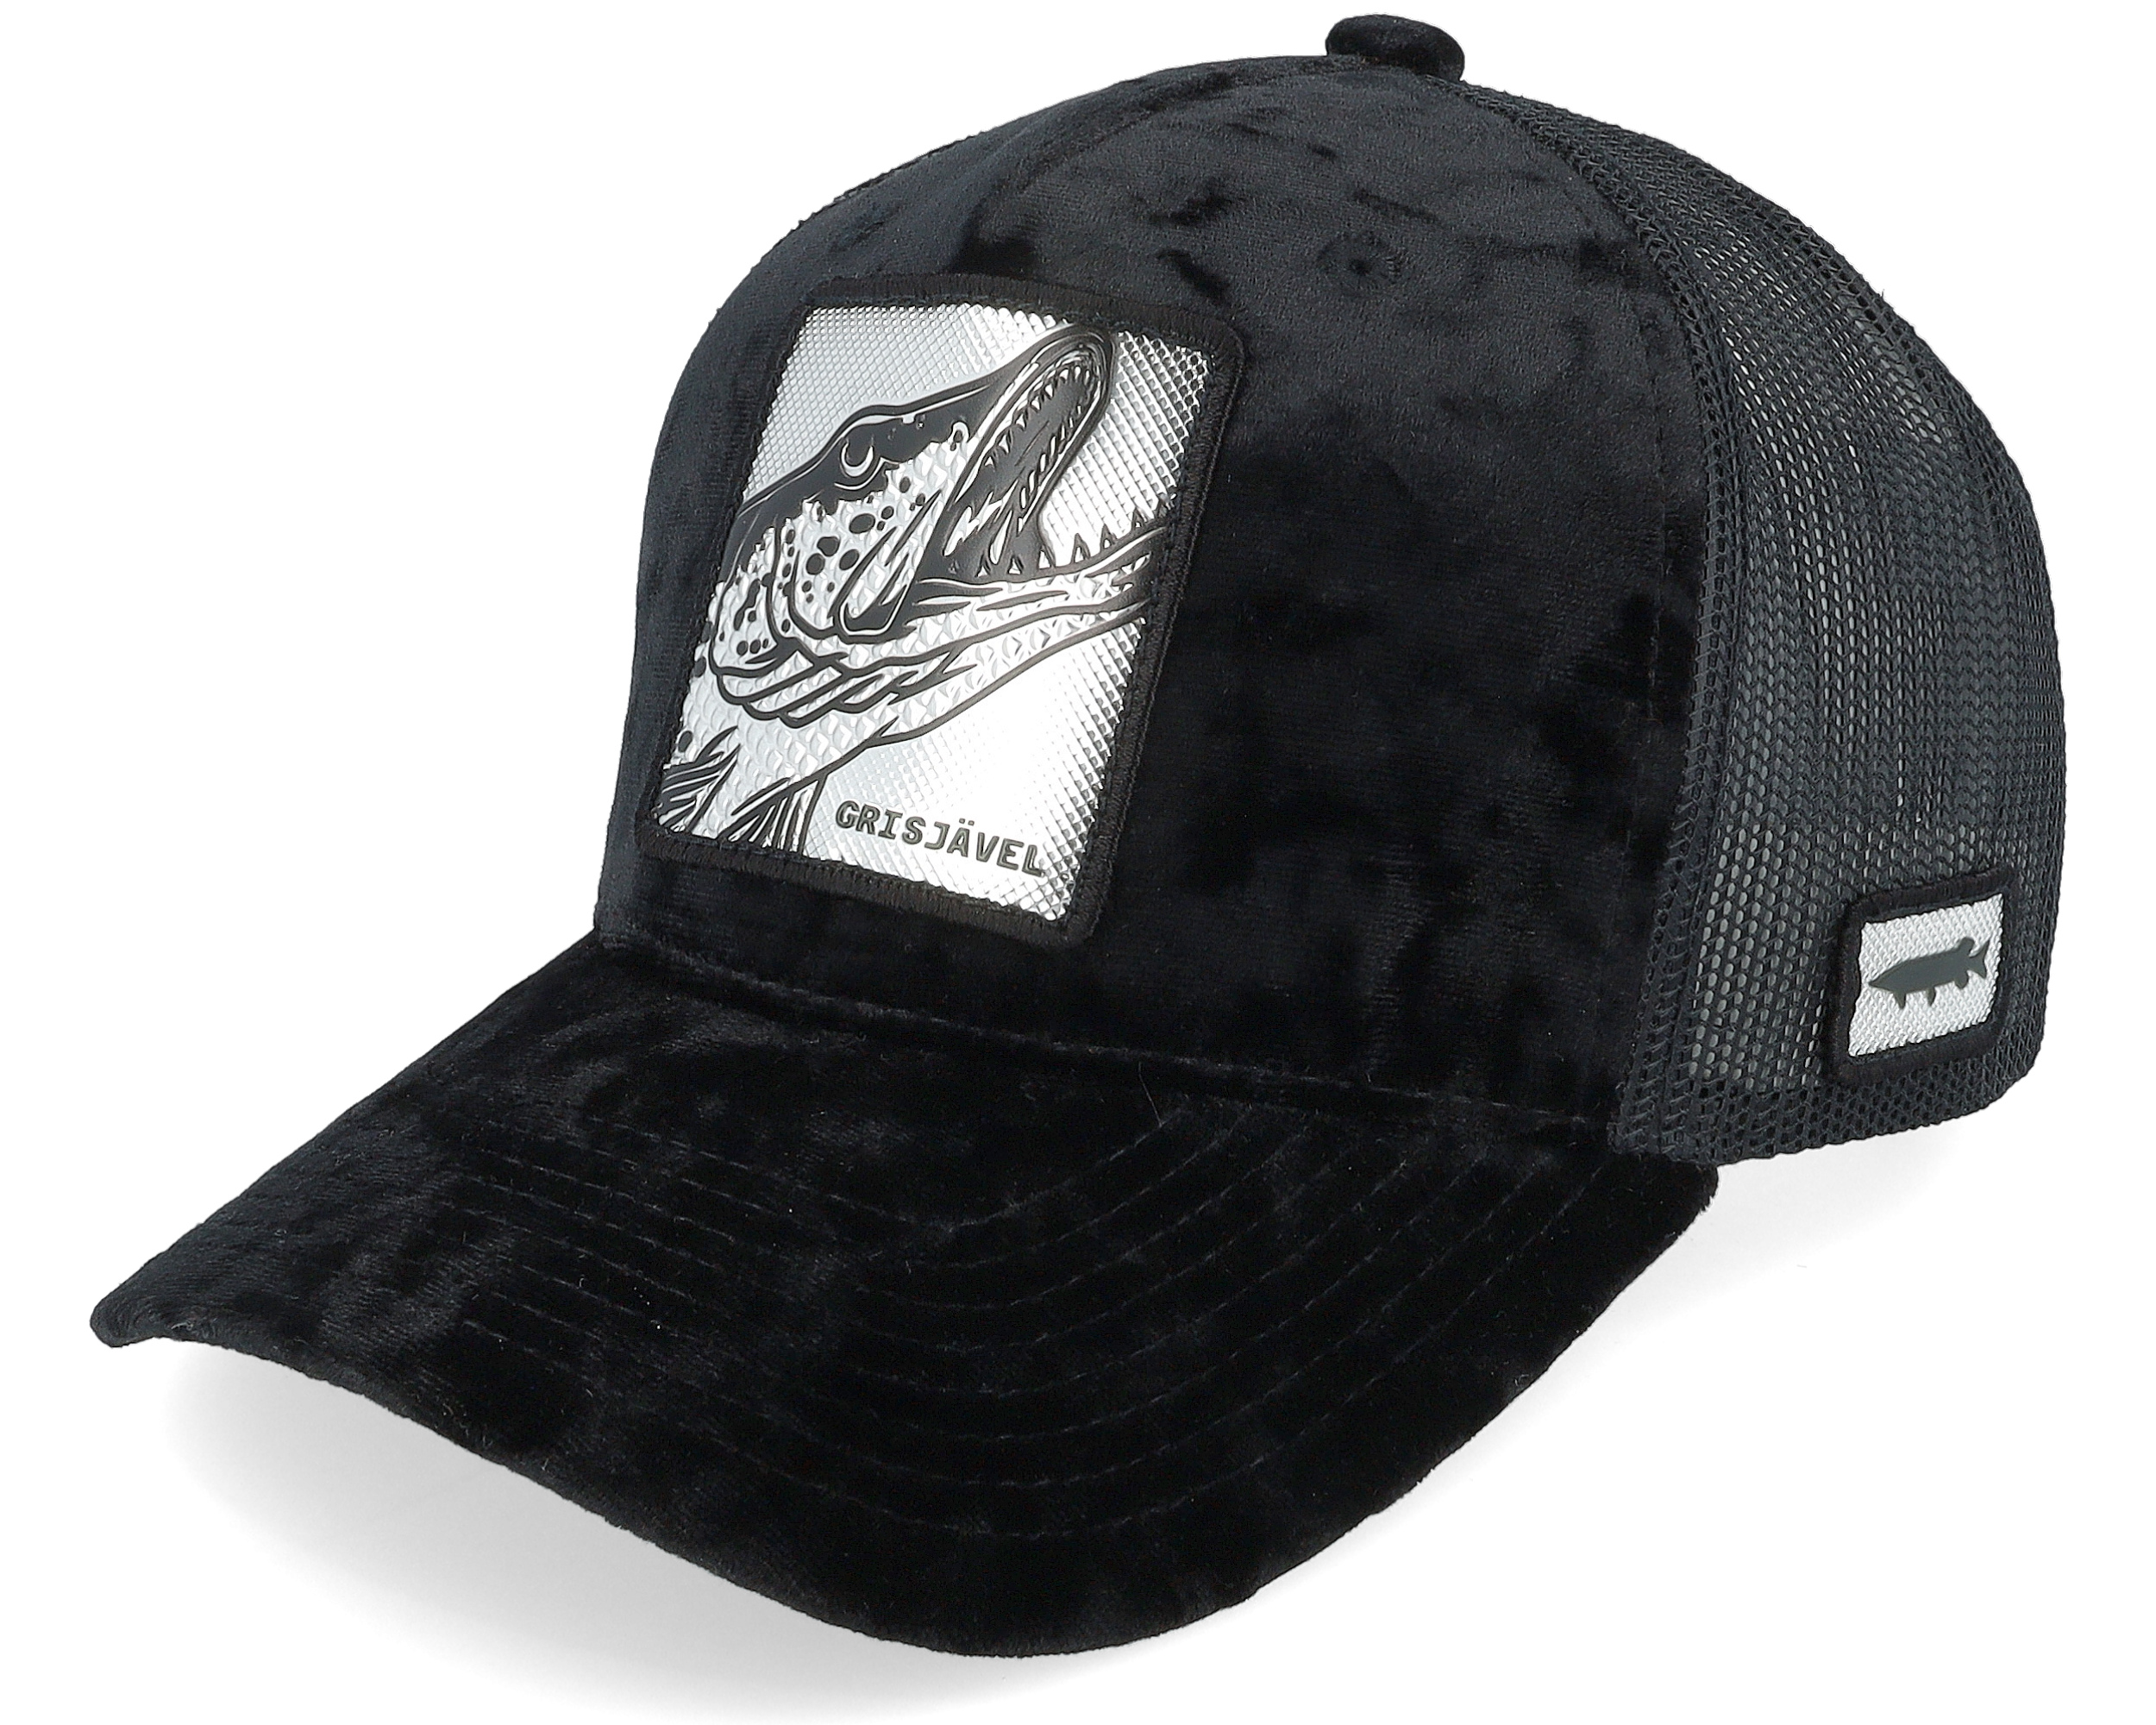 Skillfish - Black trucker Cap - Silver Fish Hook Logo Black/Charcoal Trucker @ Hatstore